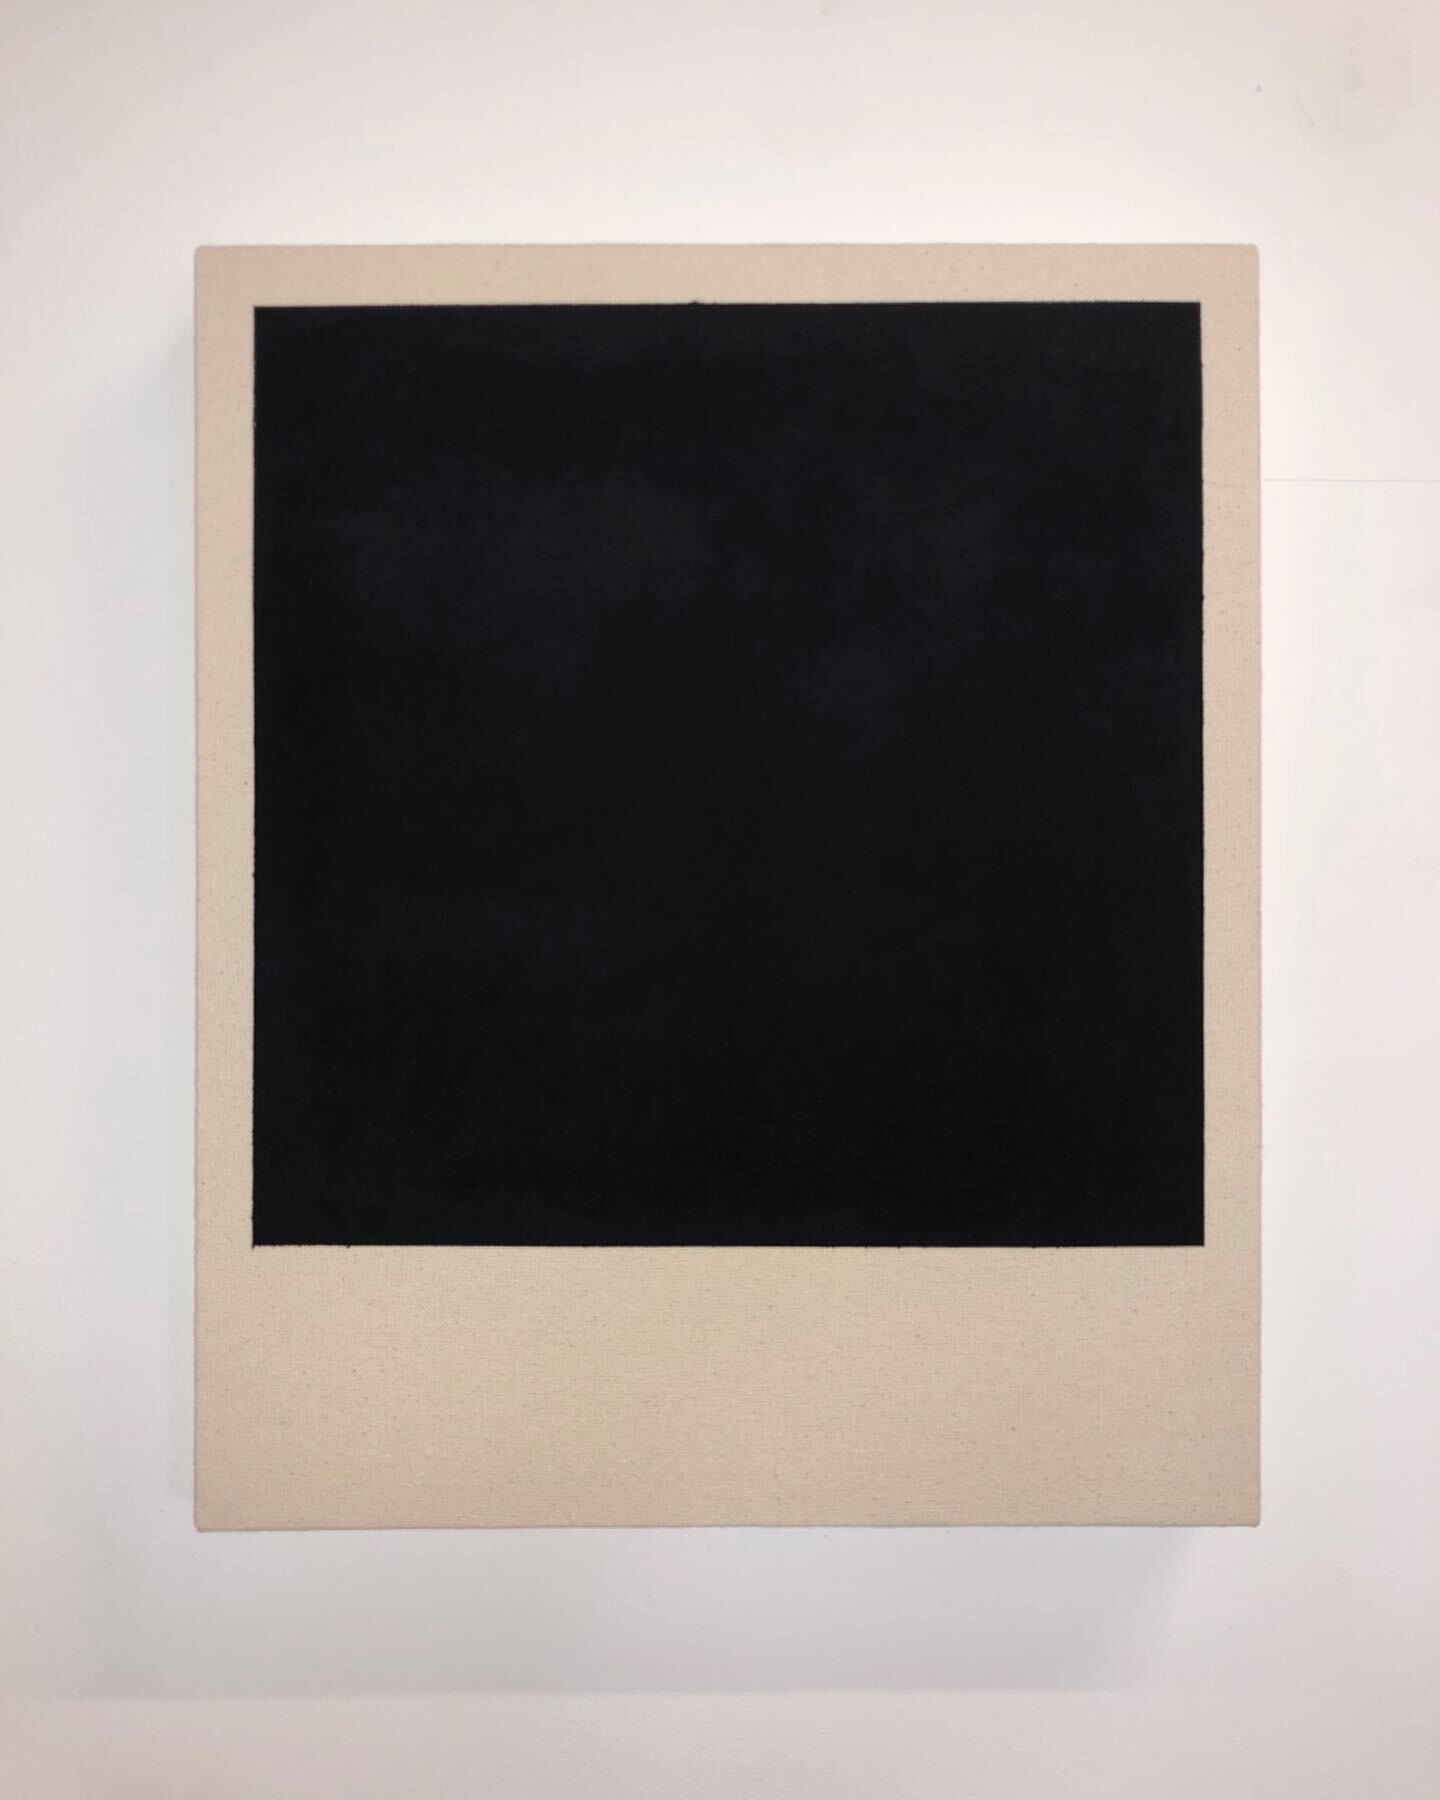   Black Square (Polaroid) , 2020 Acrylic on canvas 13.5 x 16 inches (34cm x 41cm) 